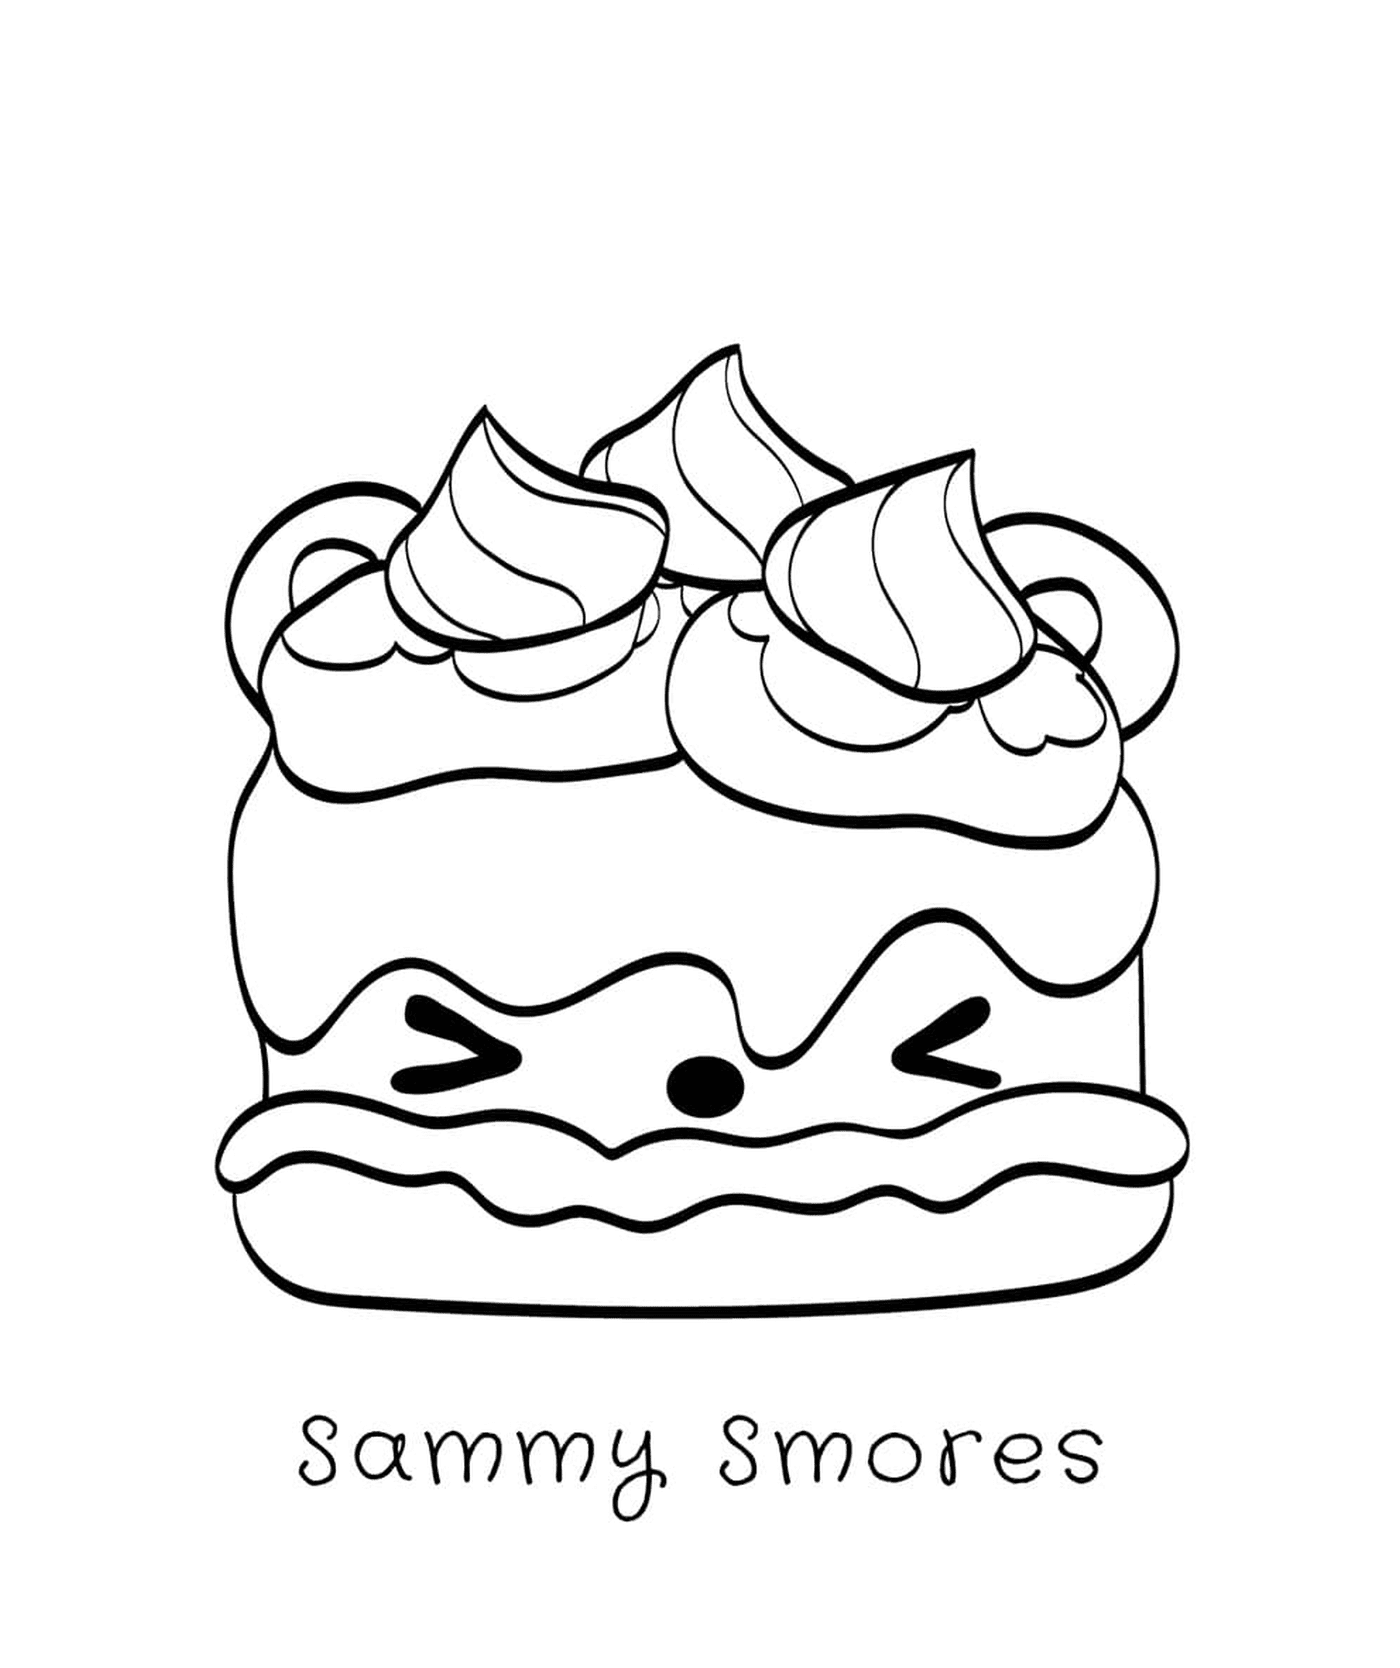   Sammy S'mores, une gourmandise 